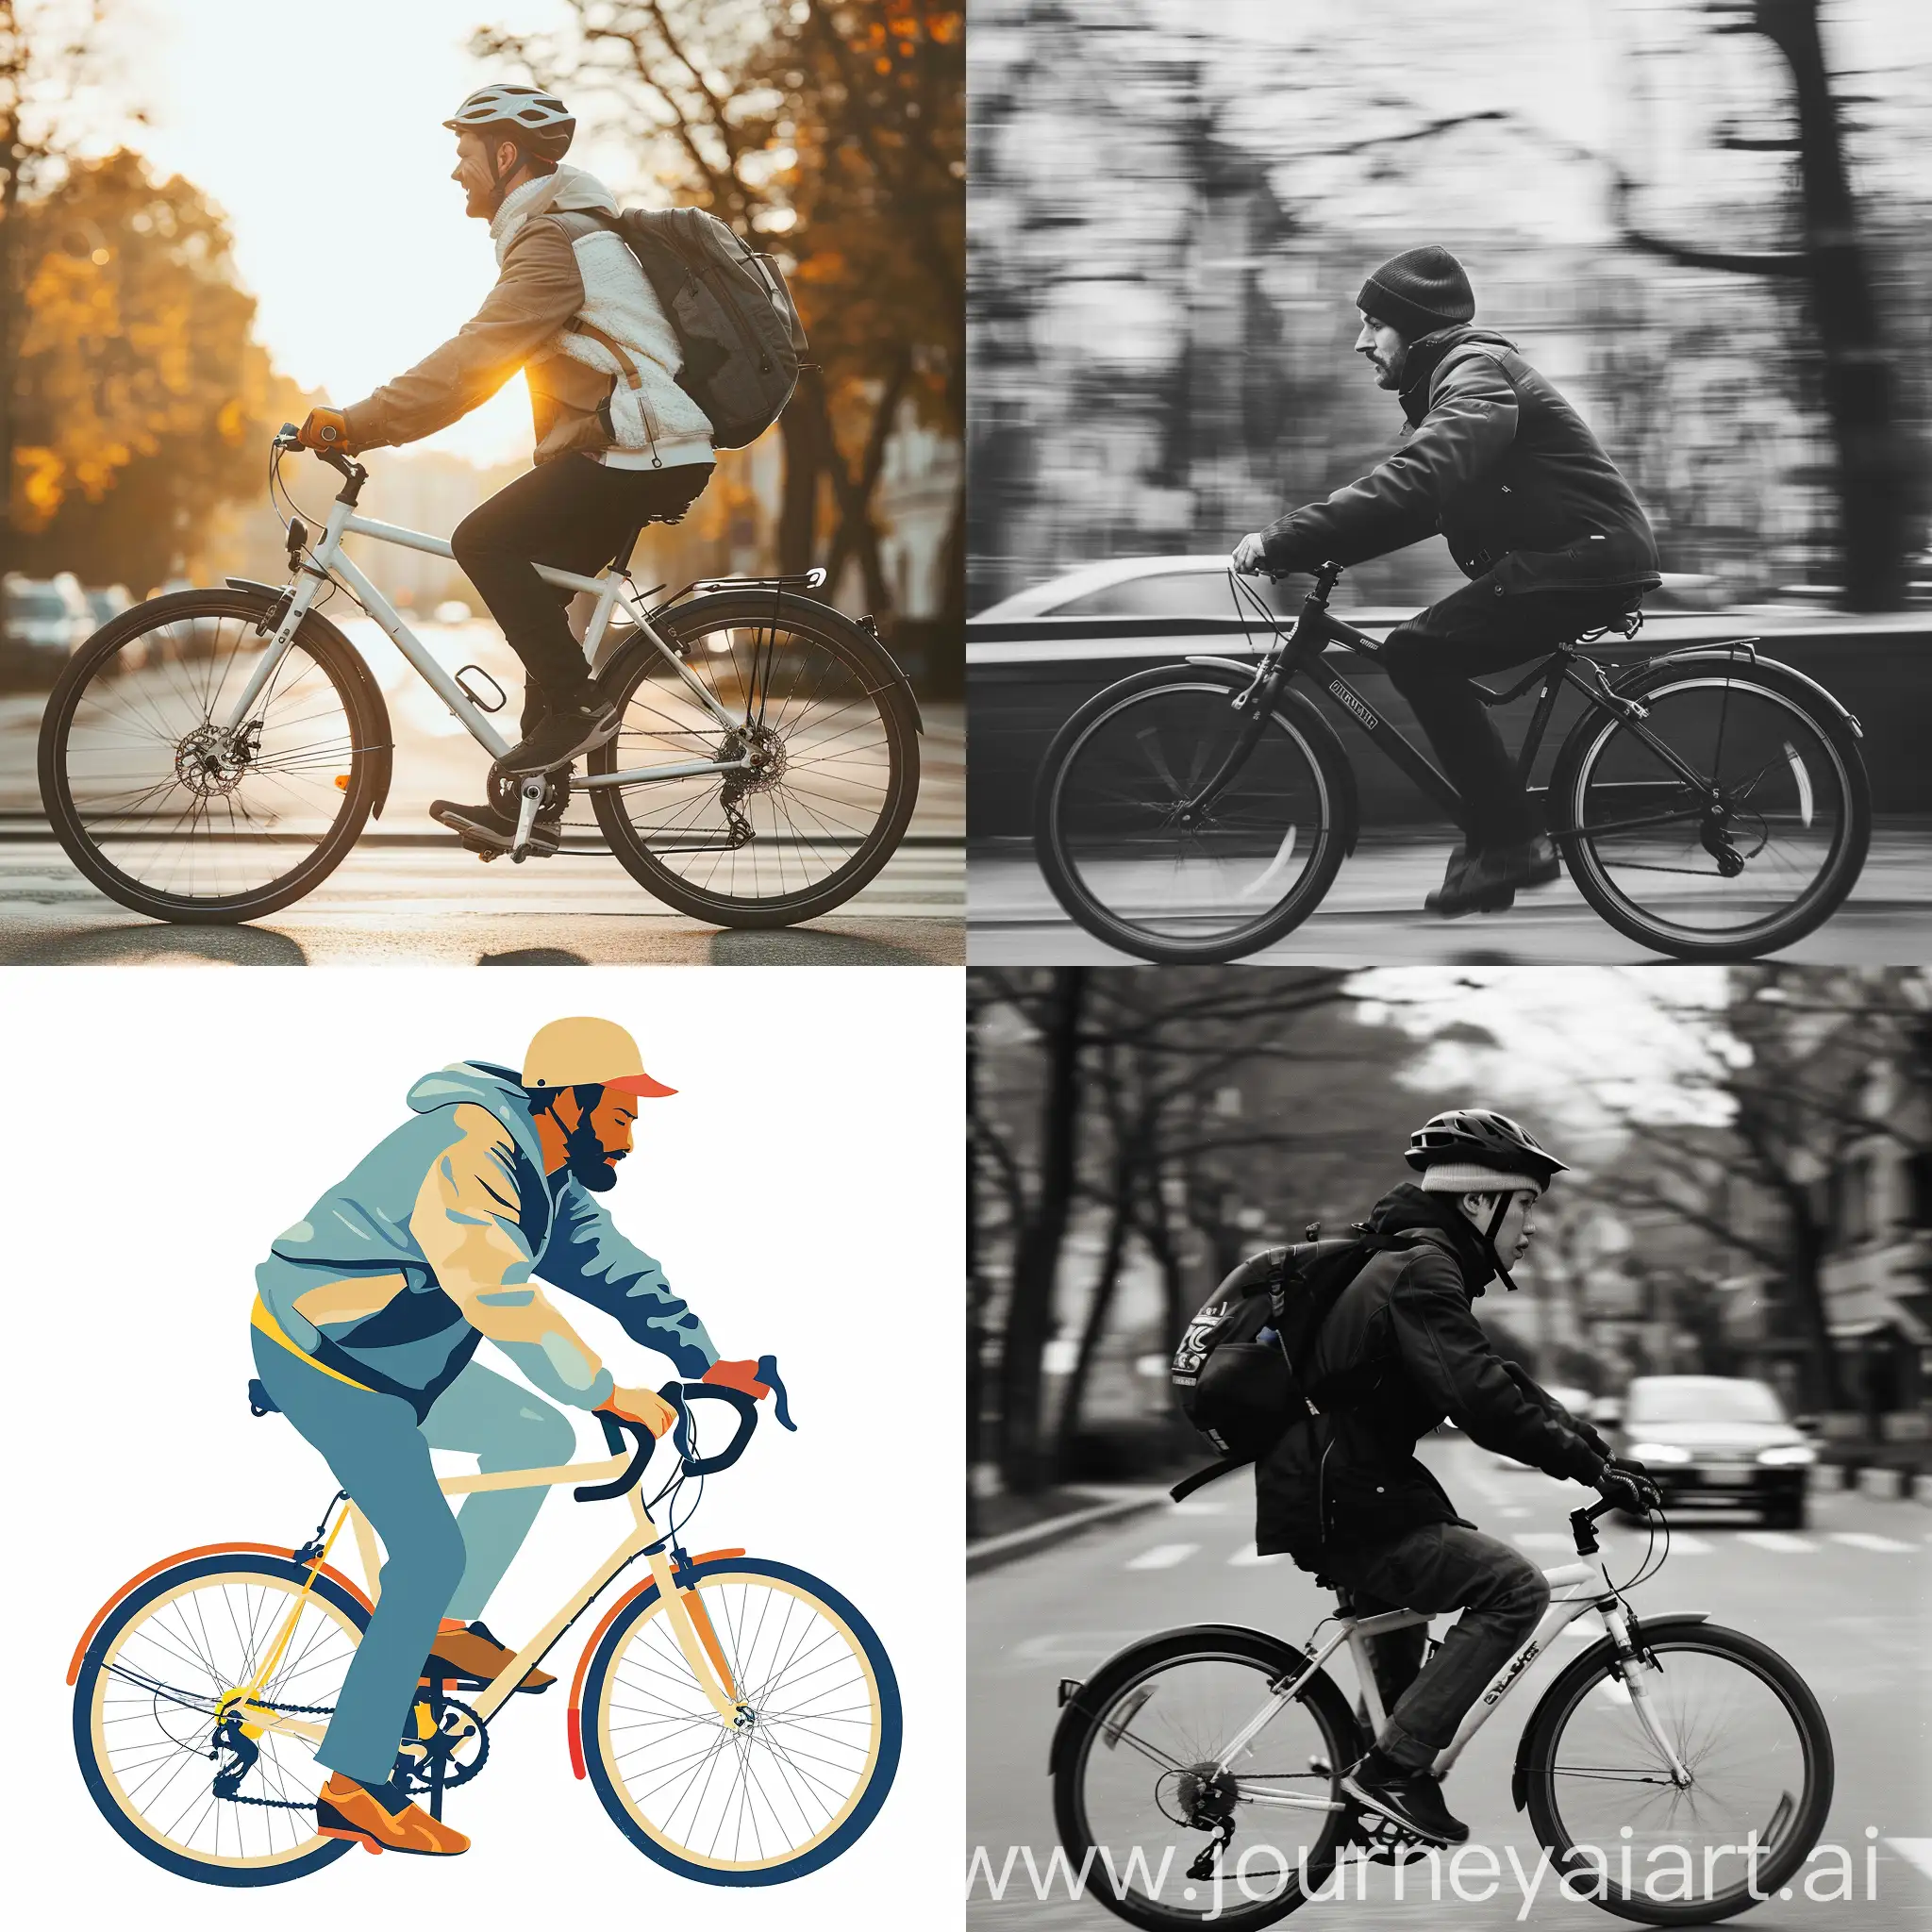 A man riding a bicycle 